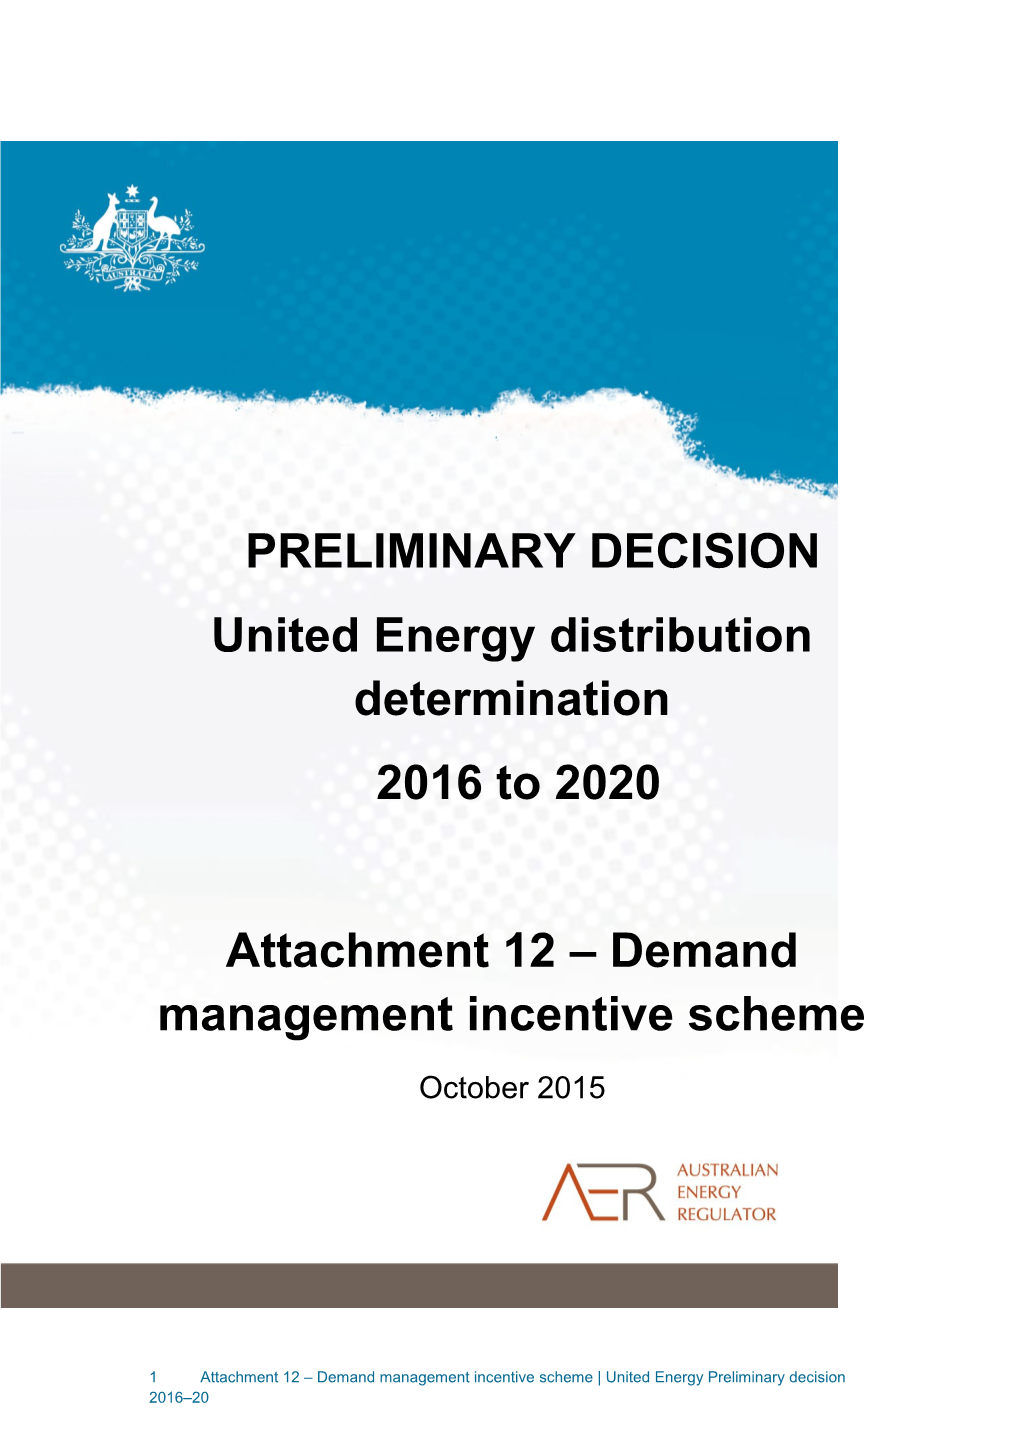 Attachment 12 Demand Management Incentive Scheme